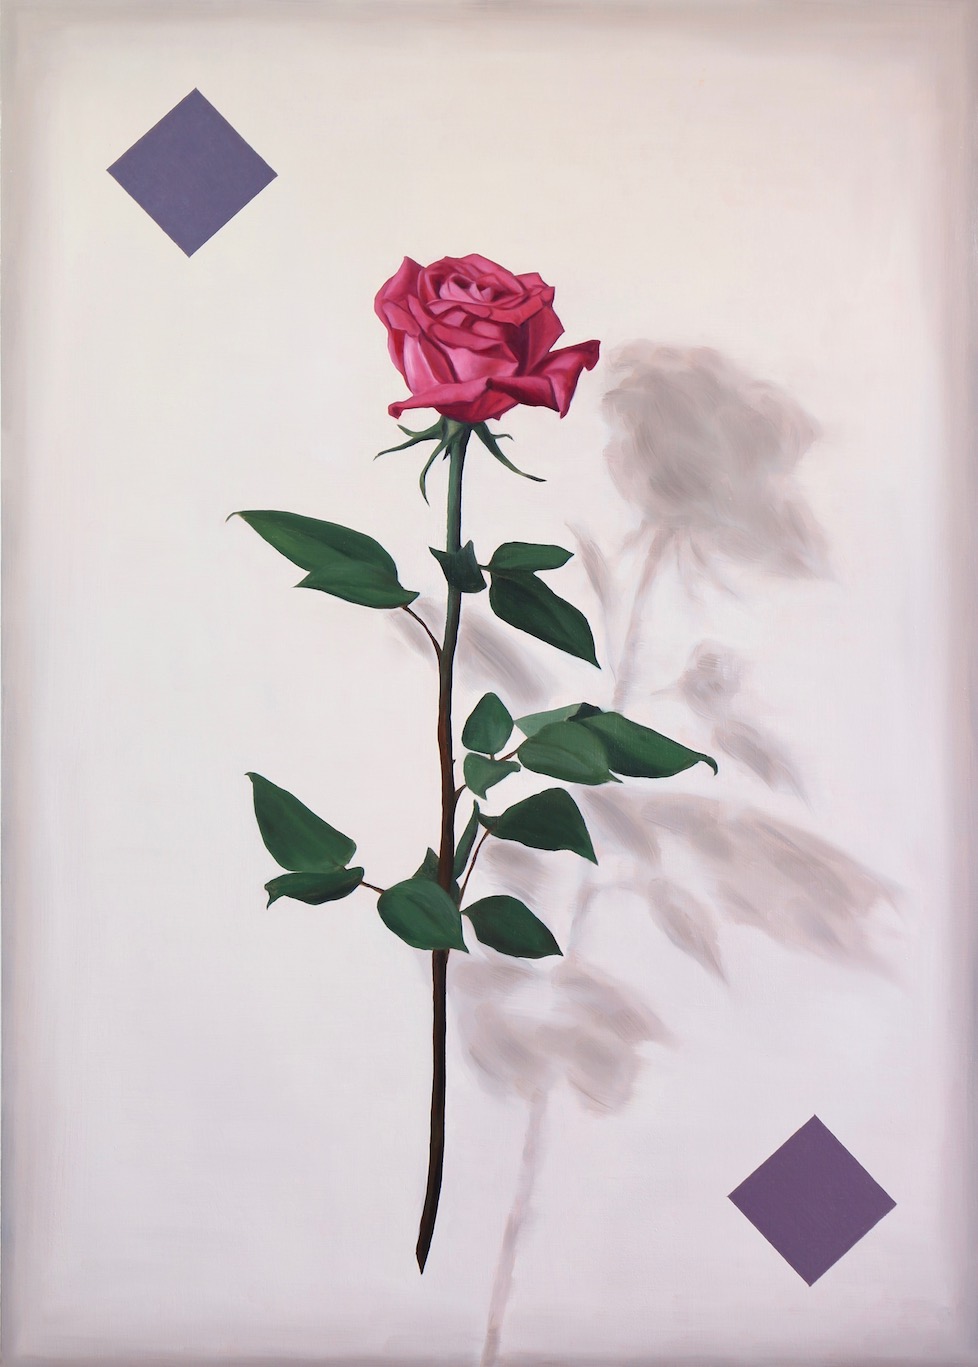 Portrait of a Rose, oil on wood panel, 70x50cm, 2018